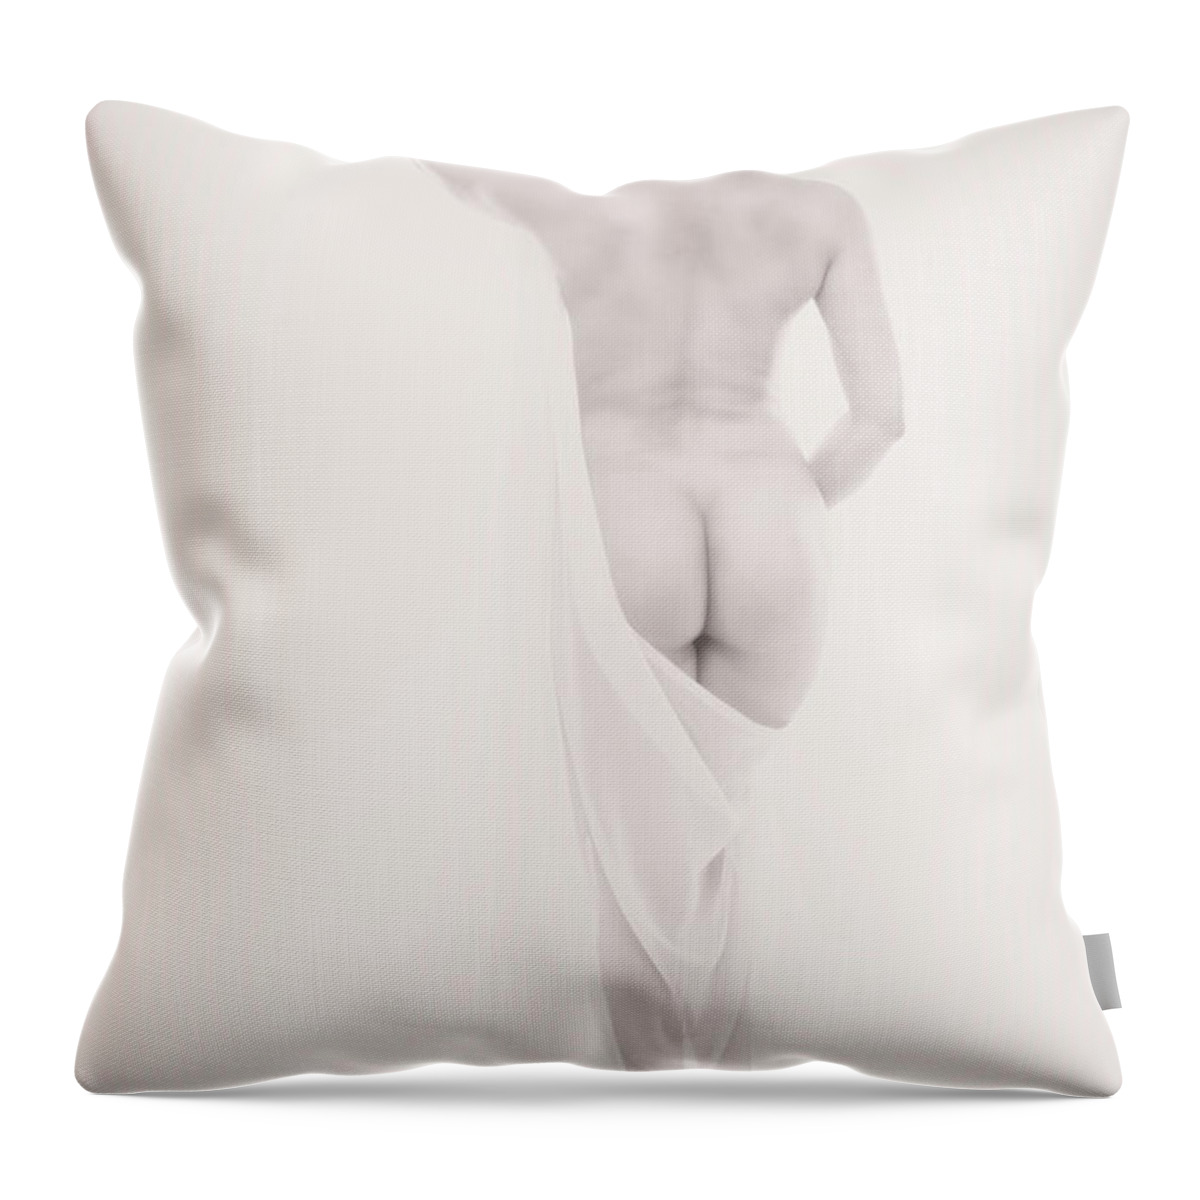 Nude Throw Pillow featuring the photograph Nude #1 by Kiran Joshi